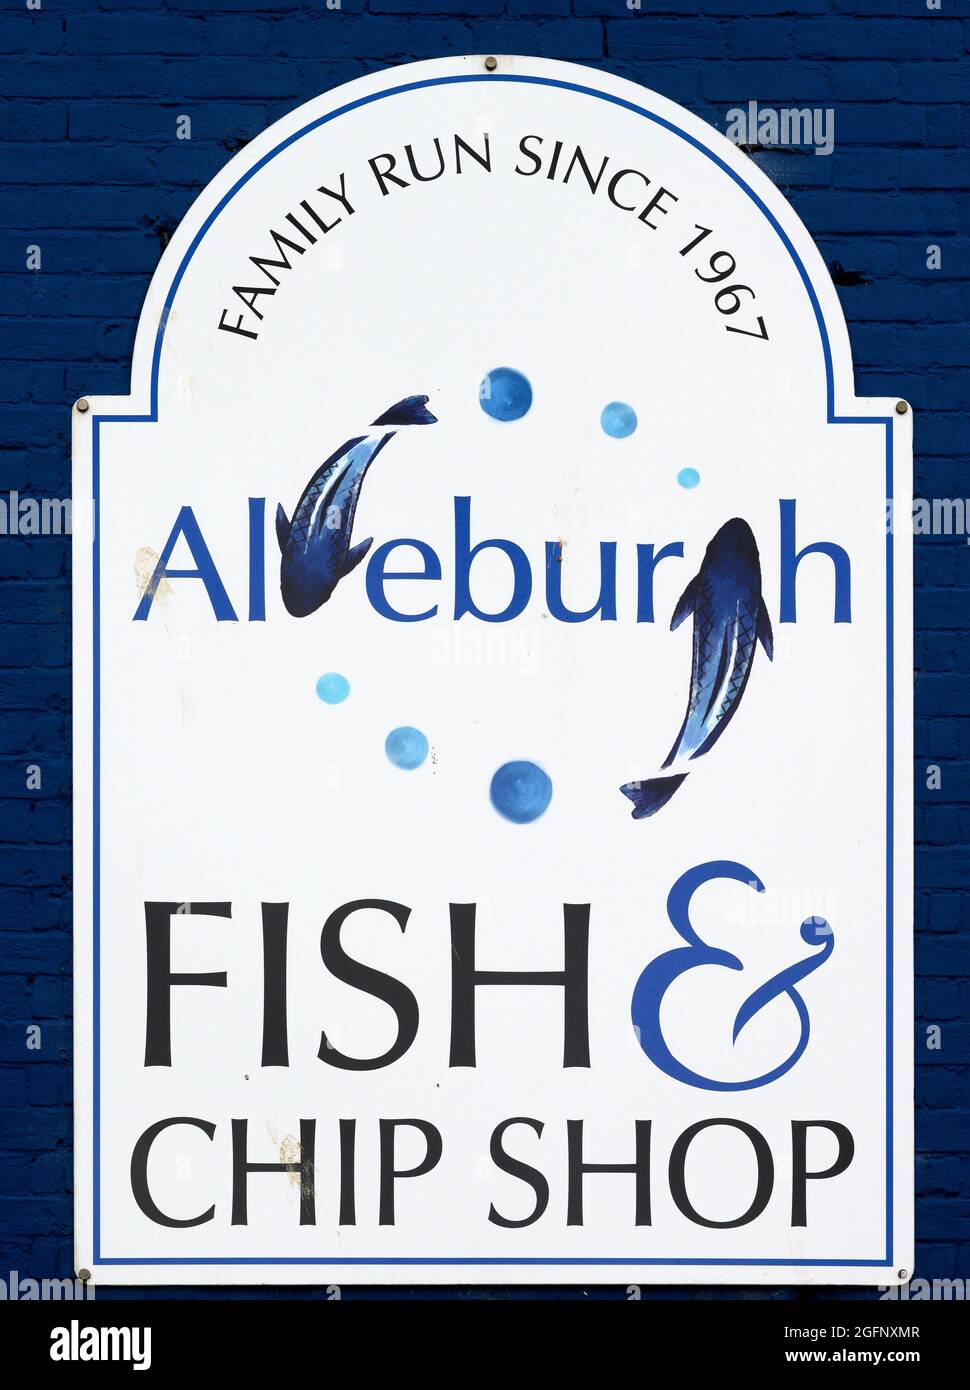 Fish and Chip Shop, Aldeburgh, Suffolk, East Anglia, Inglaterra, REINO UNIDO Foto de stock